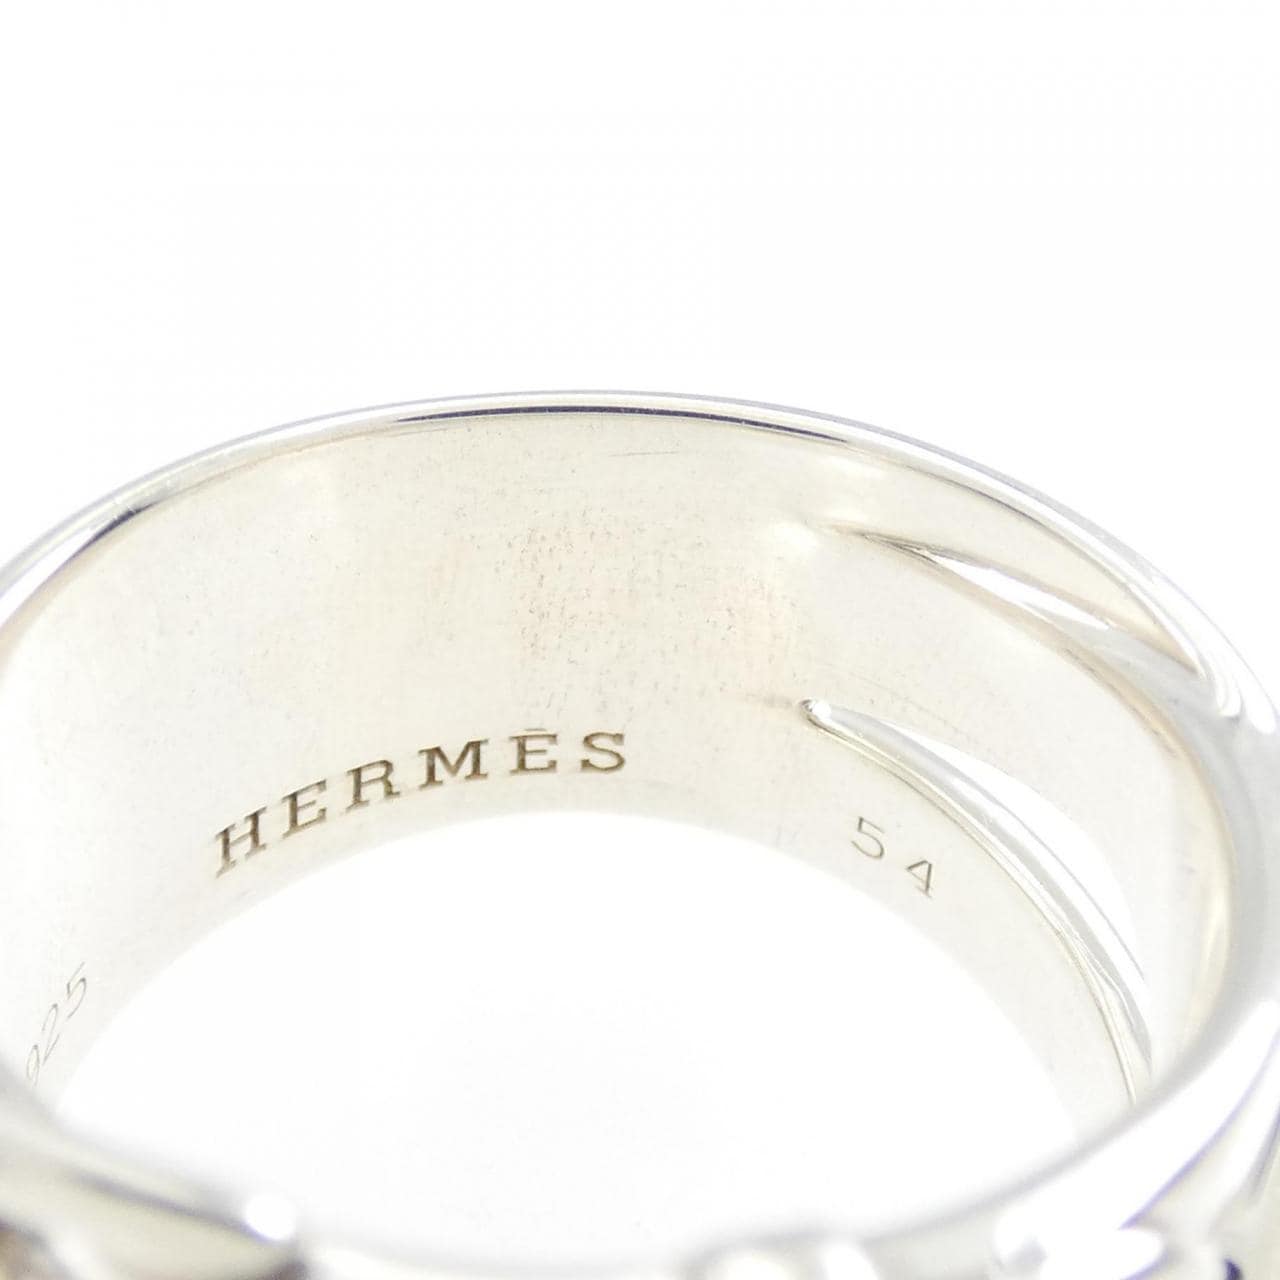 HERMES debris ring